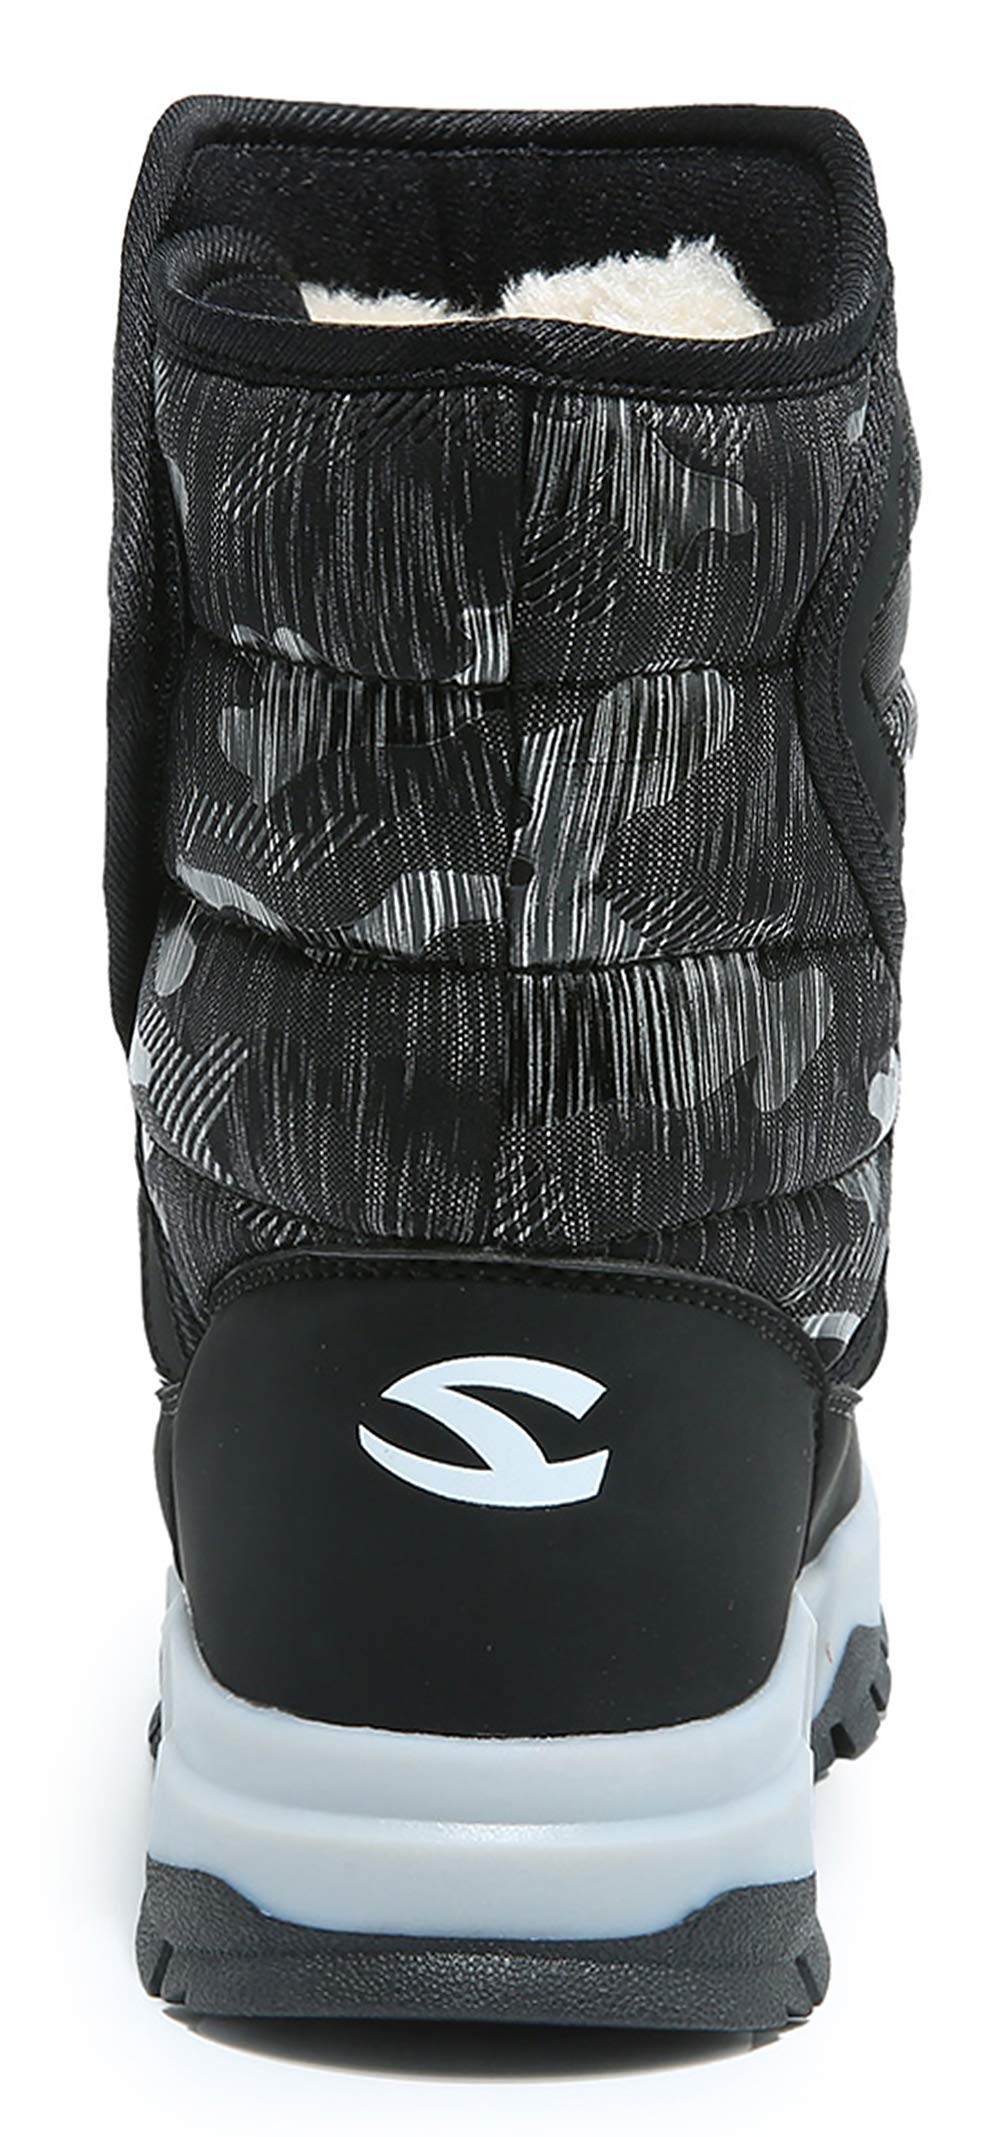 GUBARUN Boys Snow Boots Winter Waterproof Slip Resistant Cold Weather Shoes (Toddler/Little Kid/Big Kid)